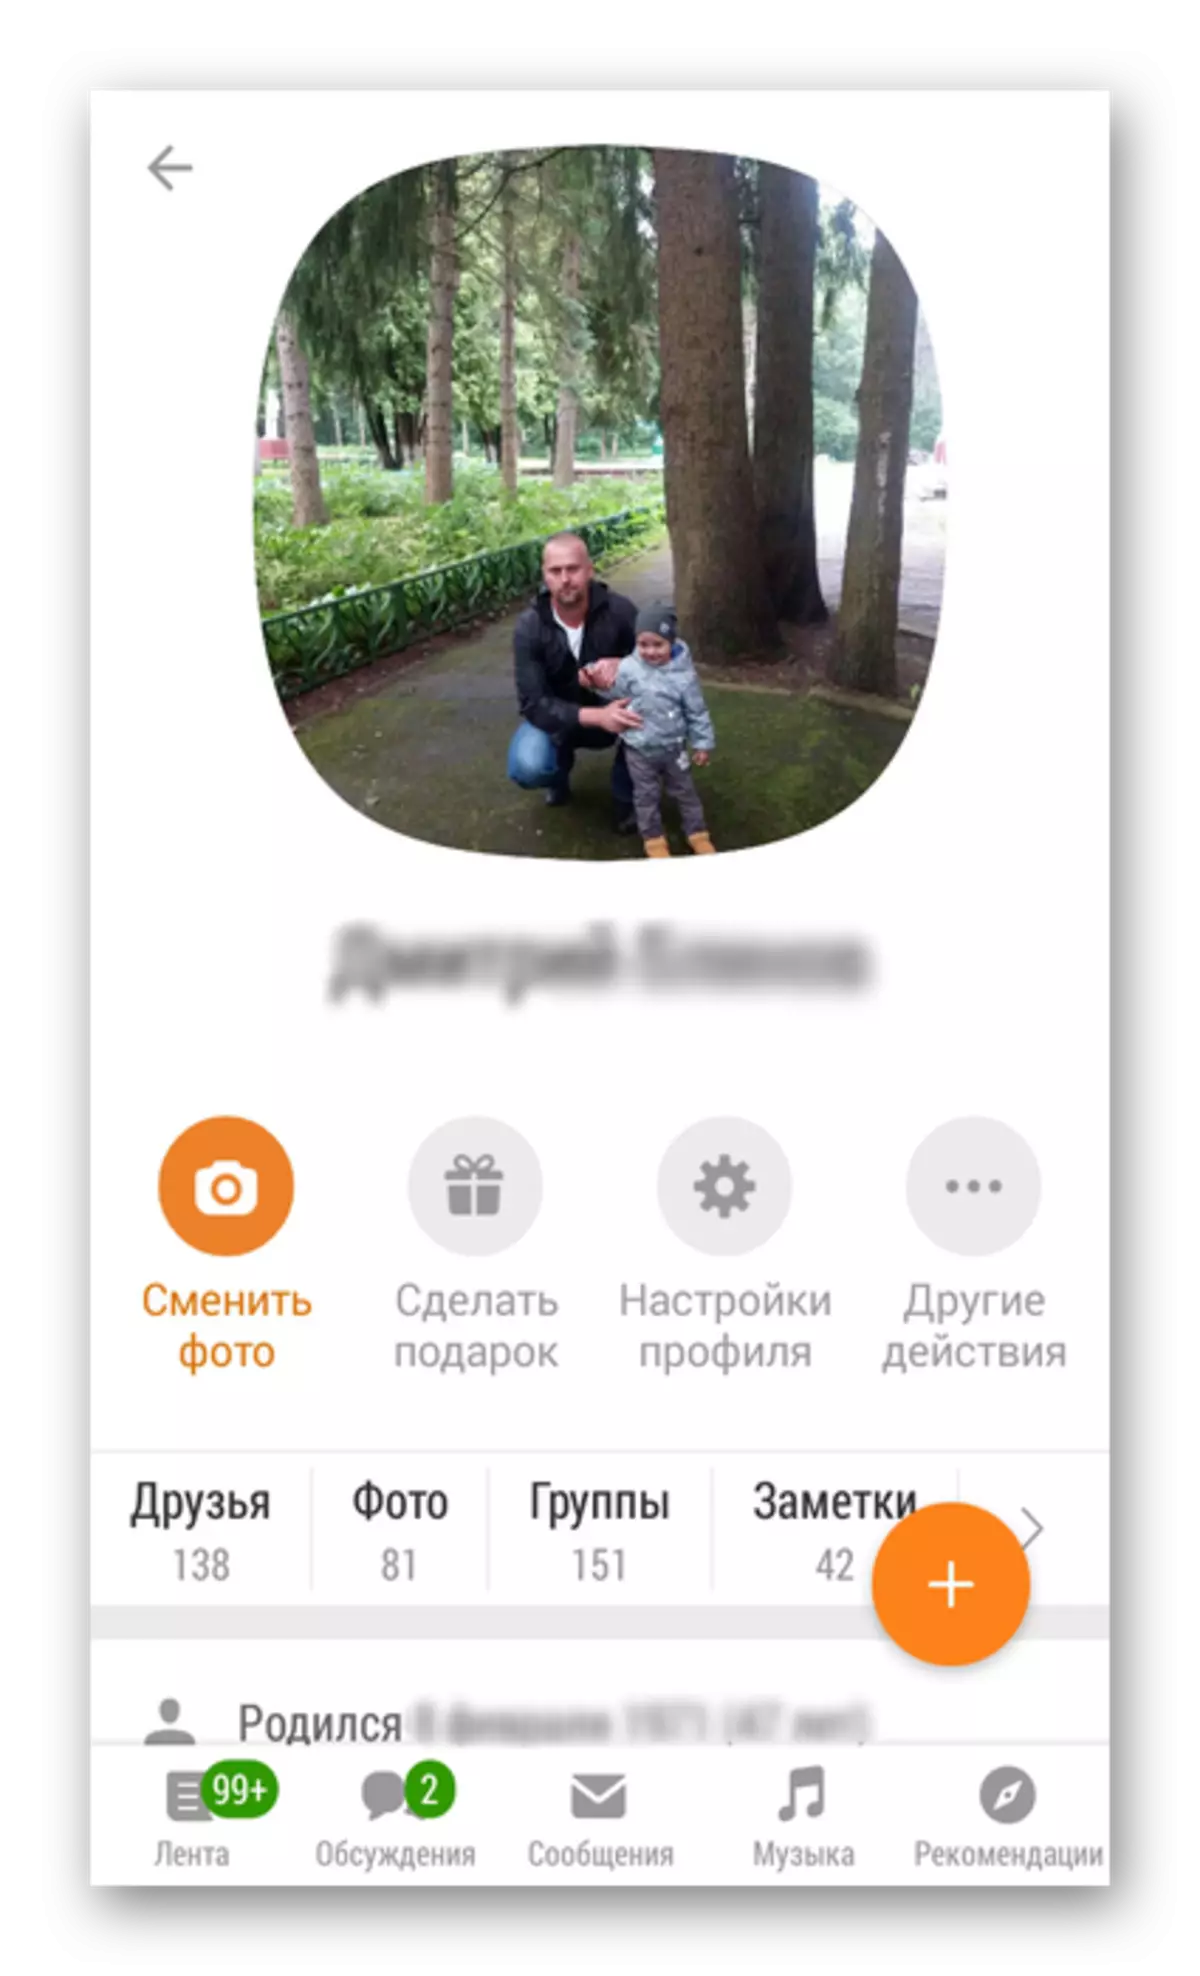 Profil dibuka dalam aplikasi Odnoklassniki